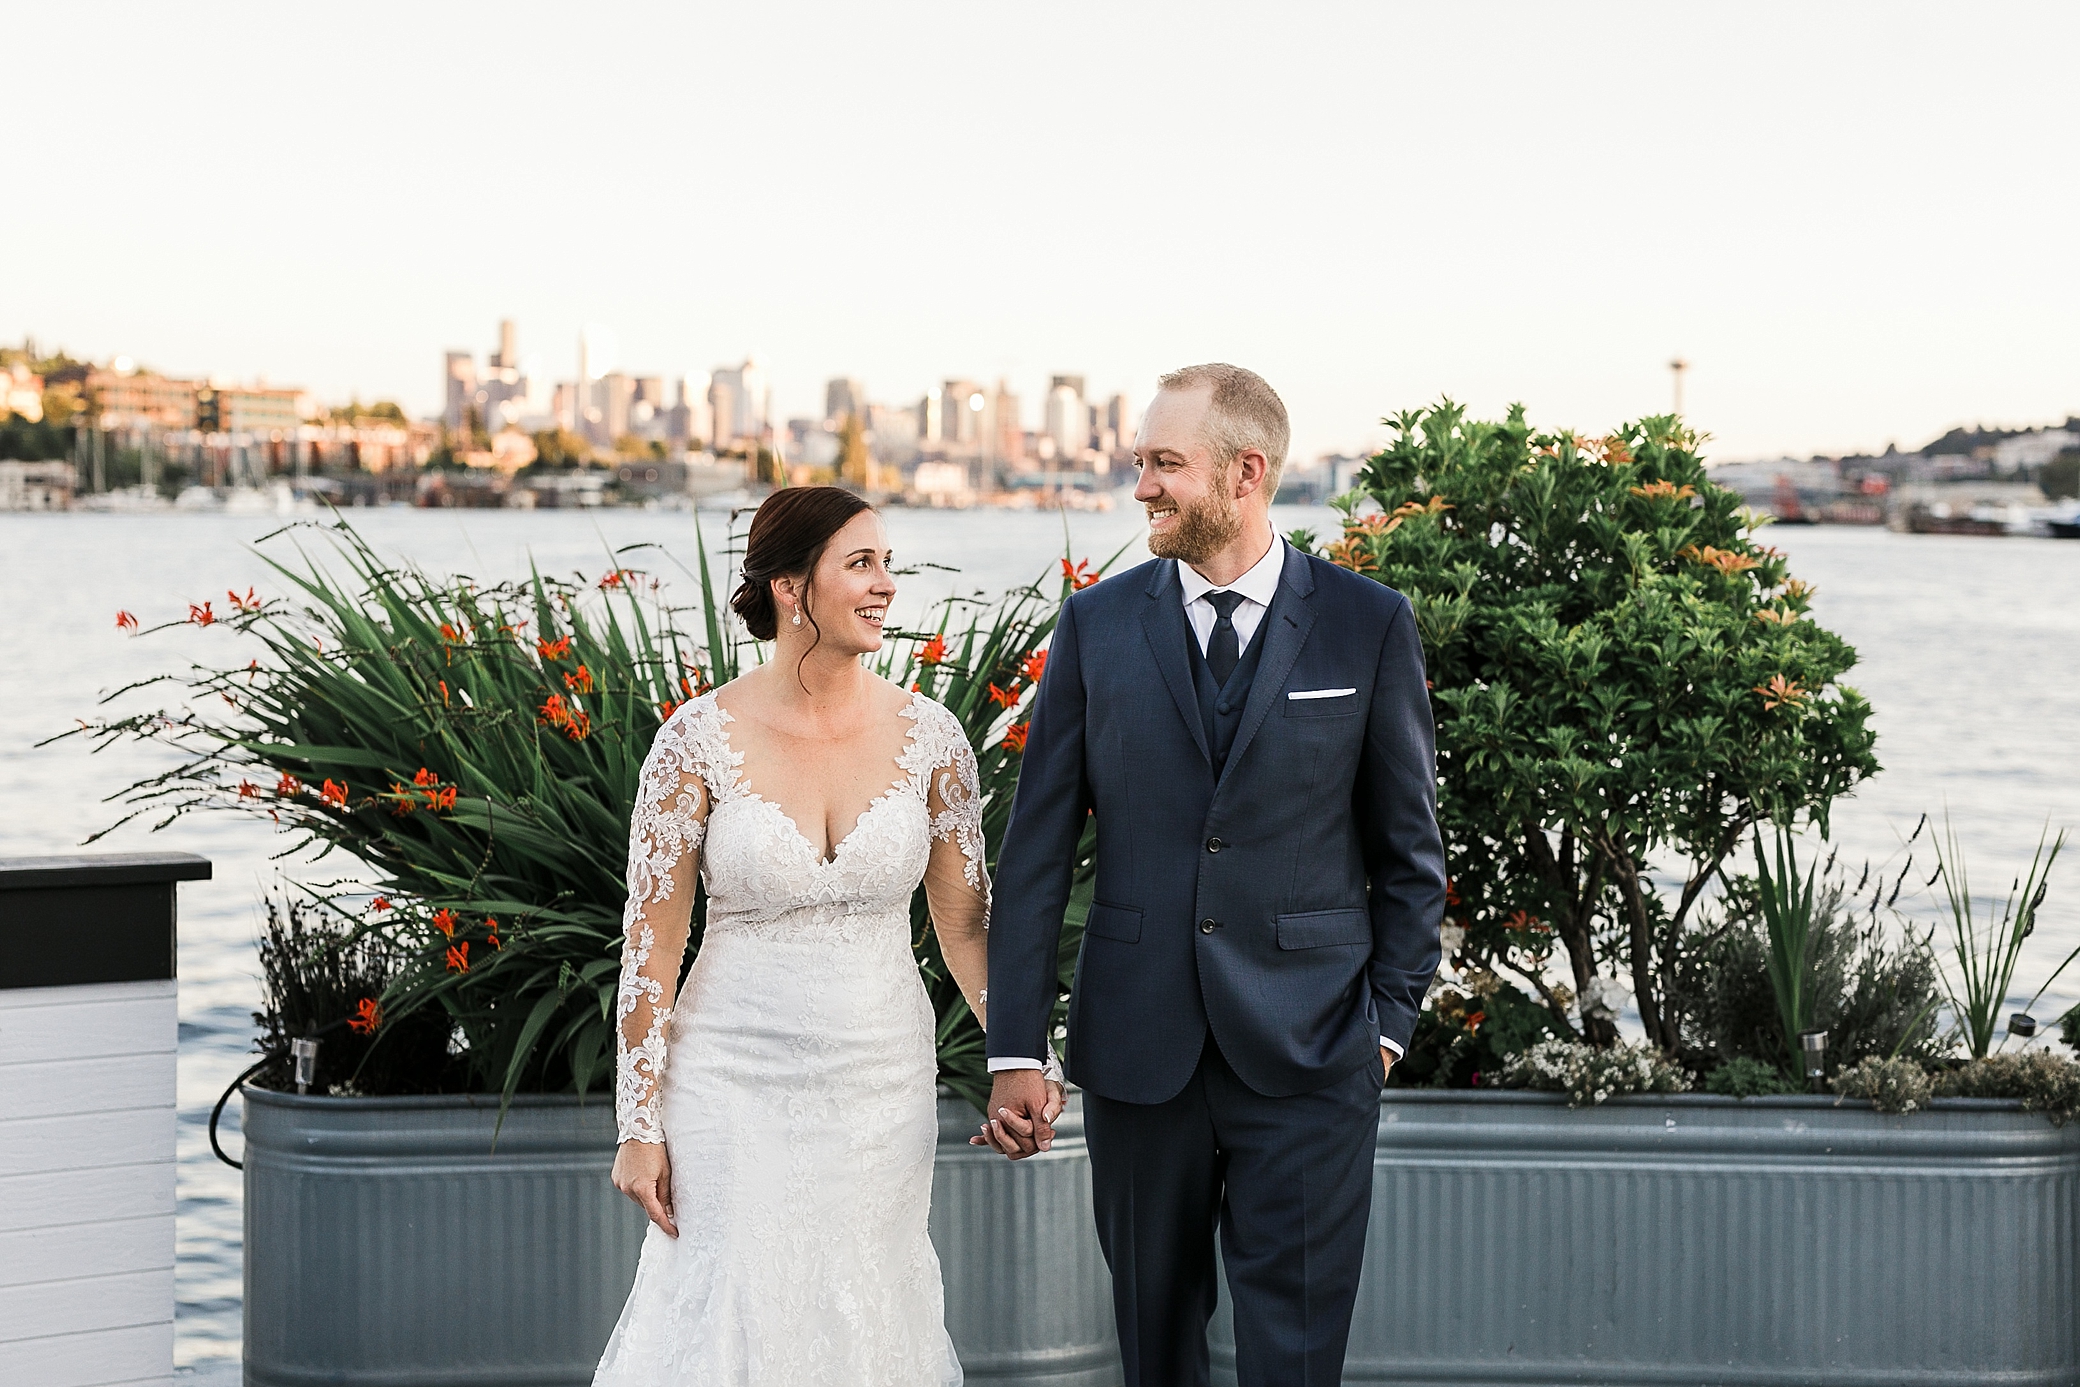 Seattle Waterfront Wedding with Seattle skyline views | Megan Montalvo Photography 